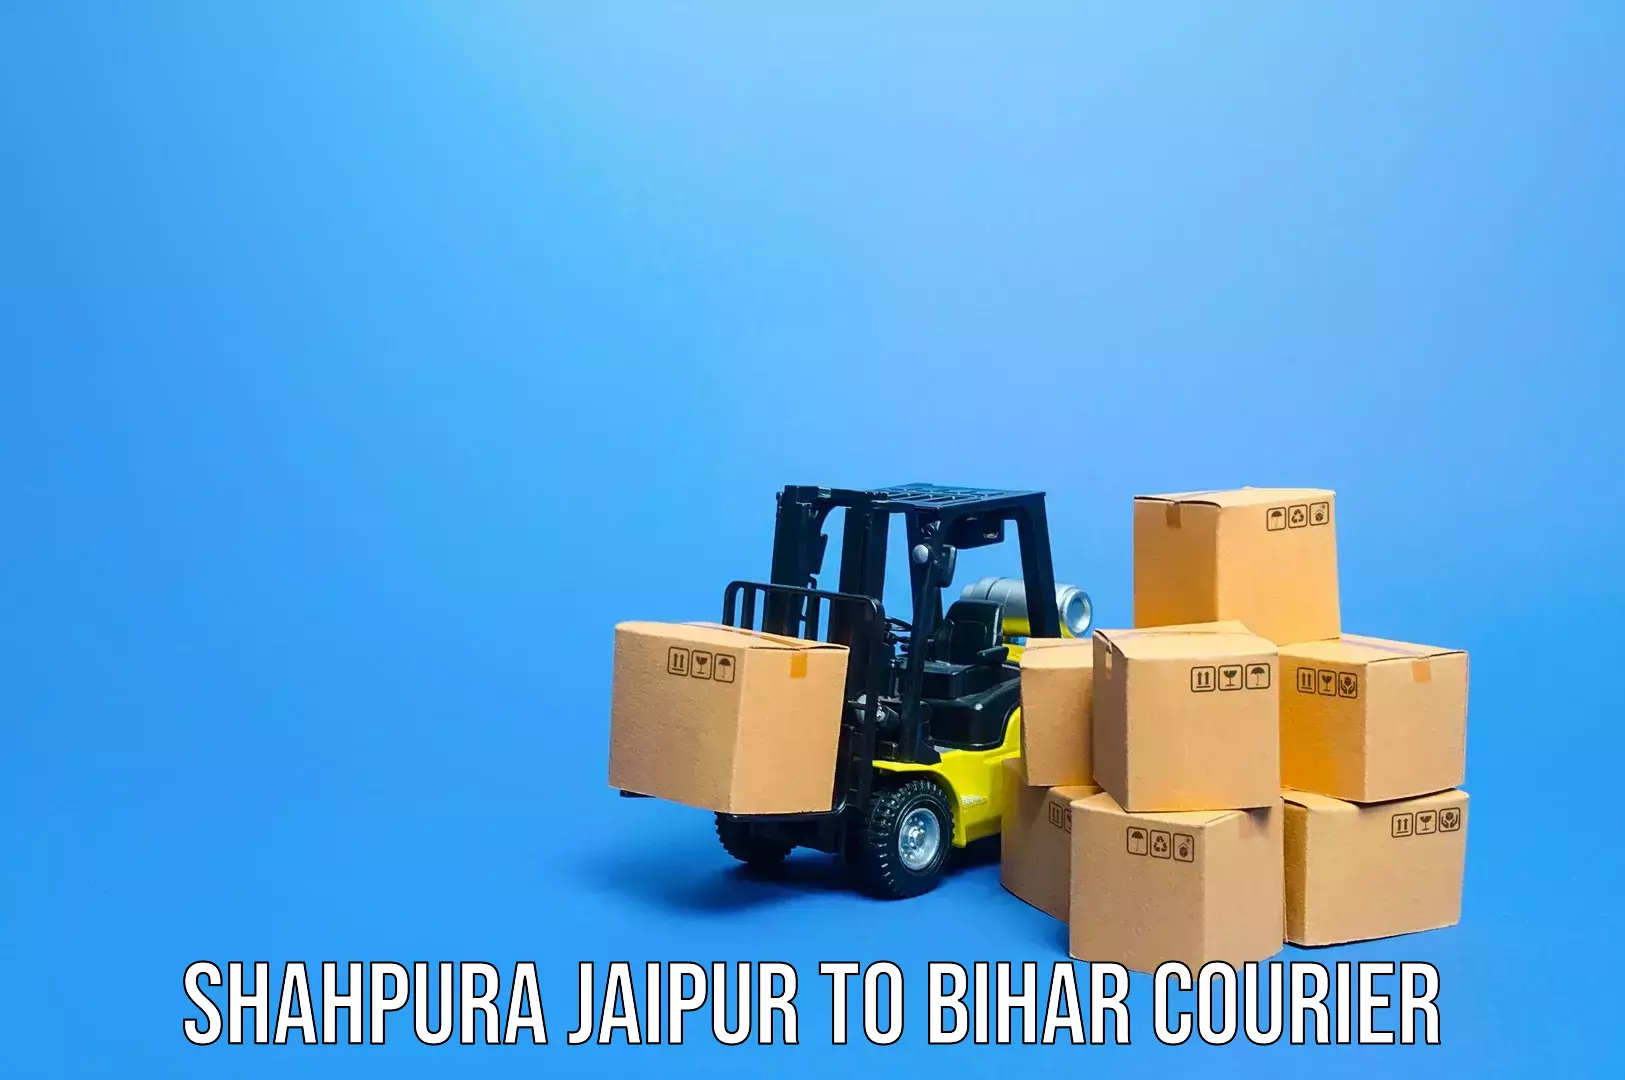 Luggage shipment specialists Shahpura Jaipur to Baniapur